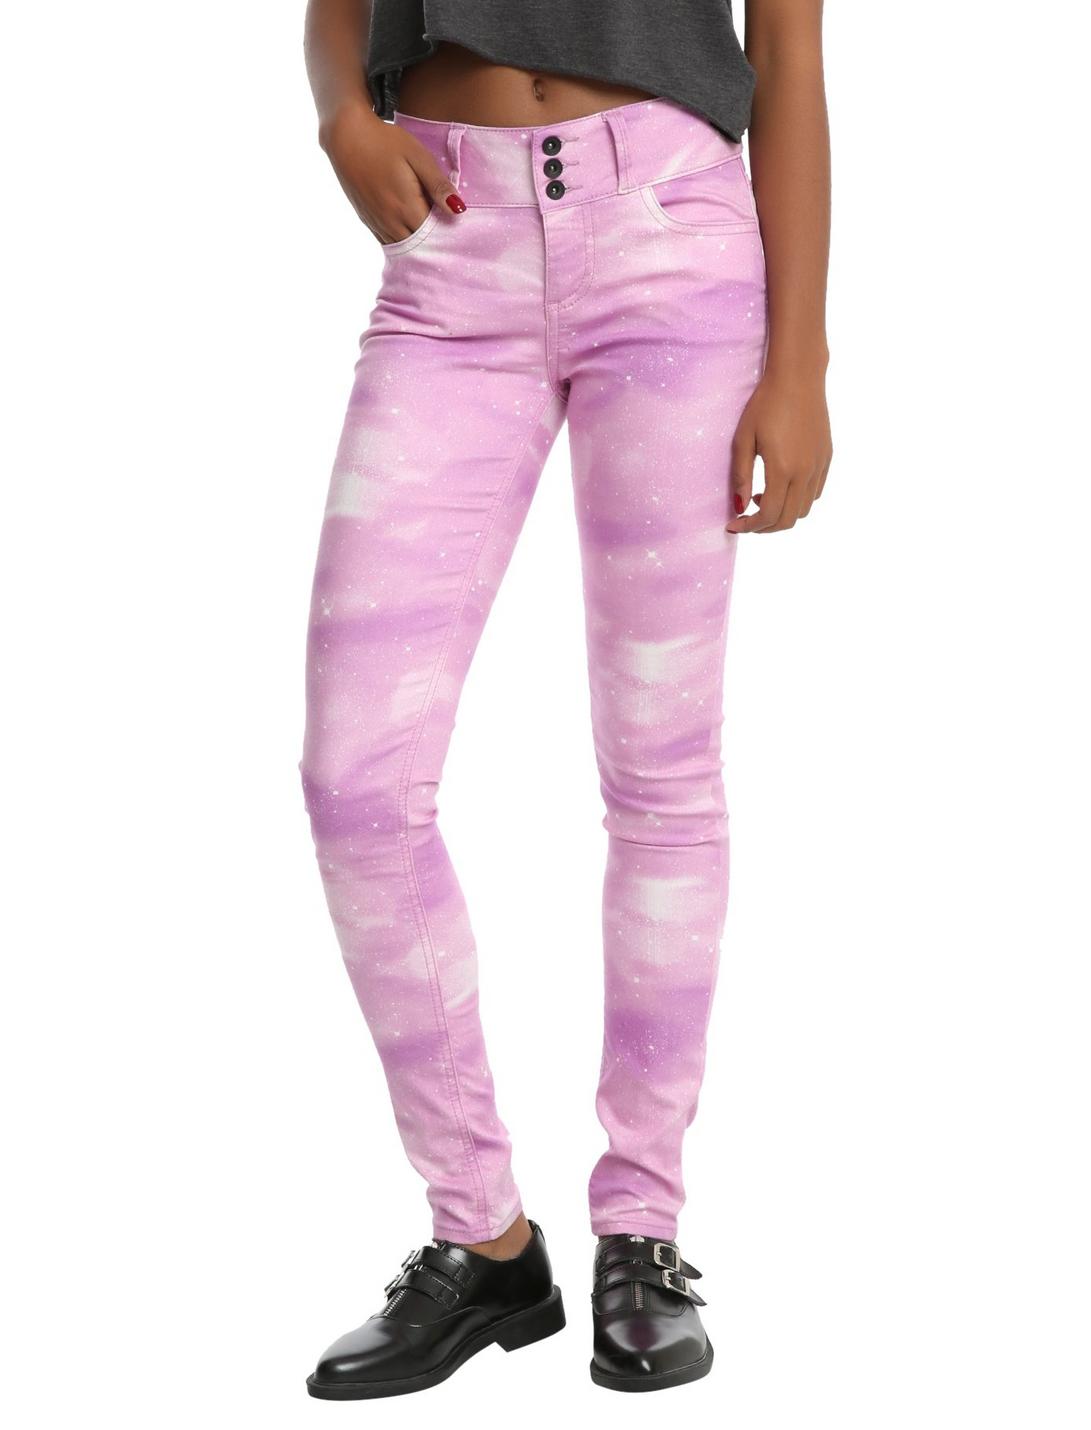 Blackheart Pastel Pink Galaxy Print Super Skinny Jeans, BLACK, hi-res